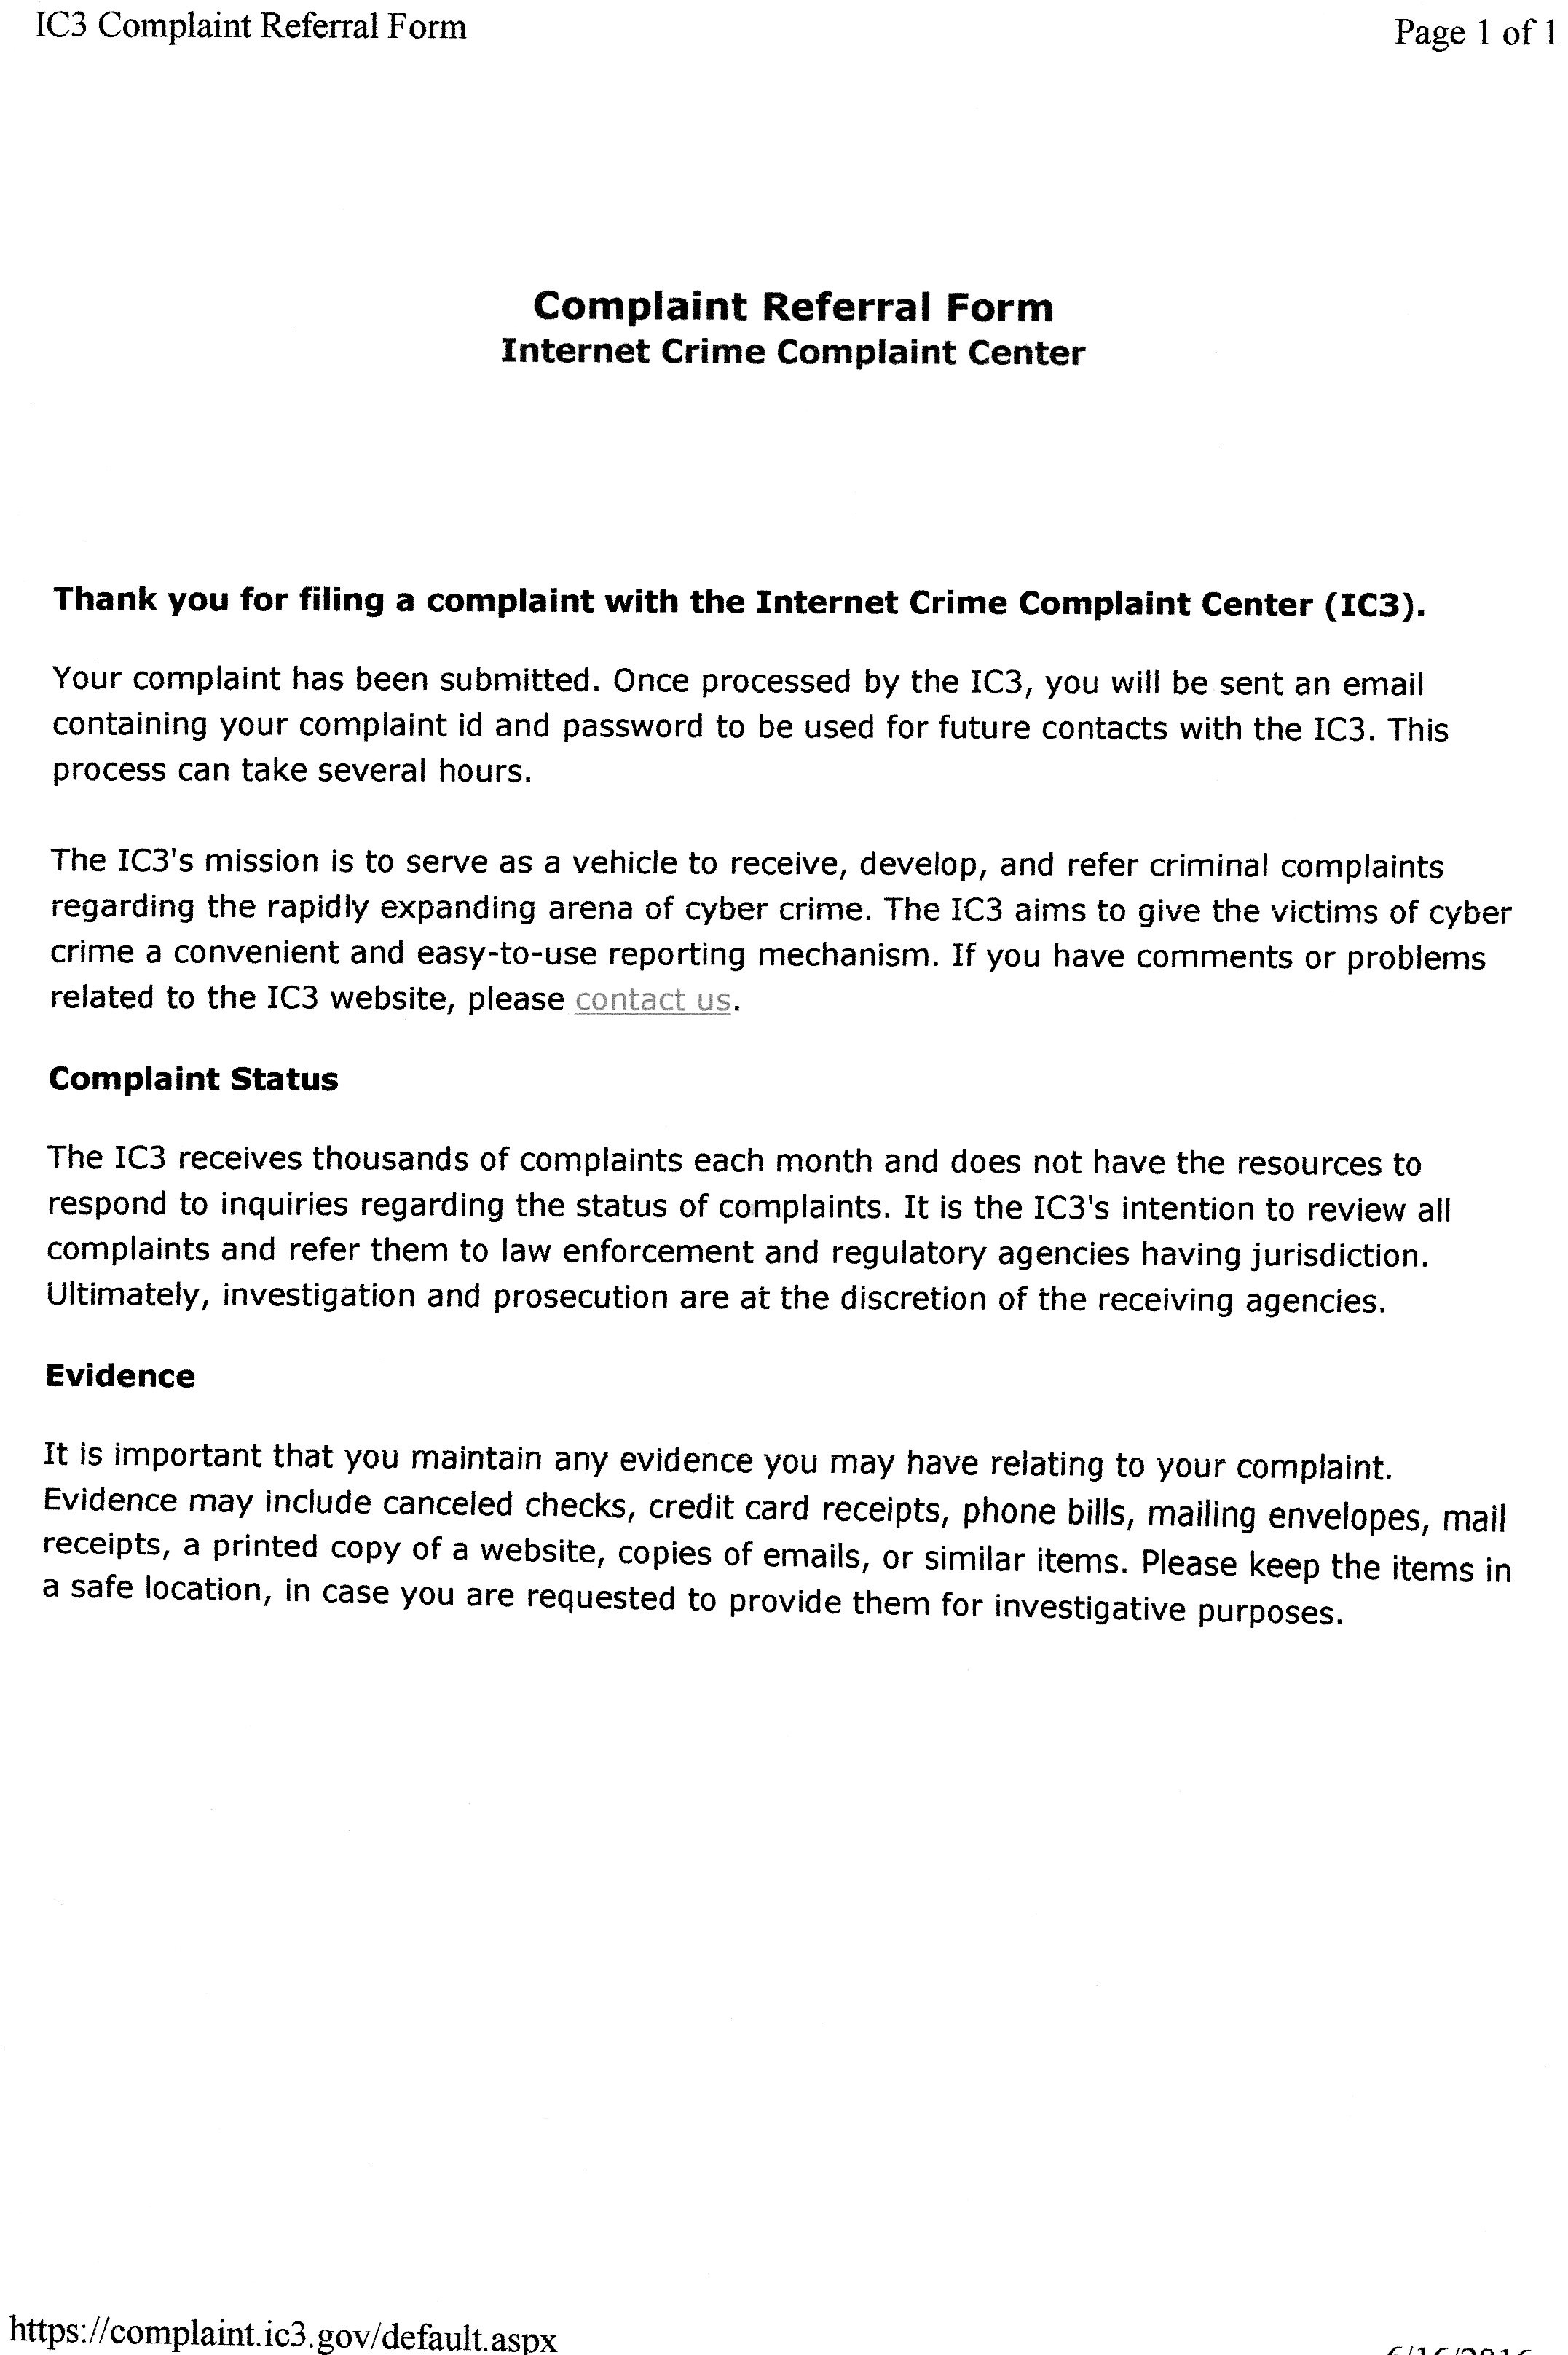 IC3 Complaint File